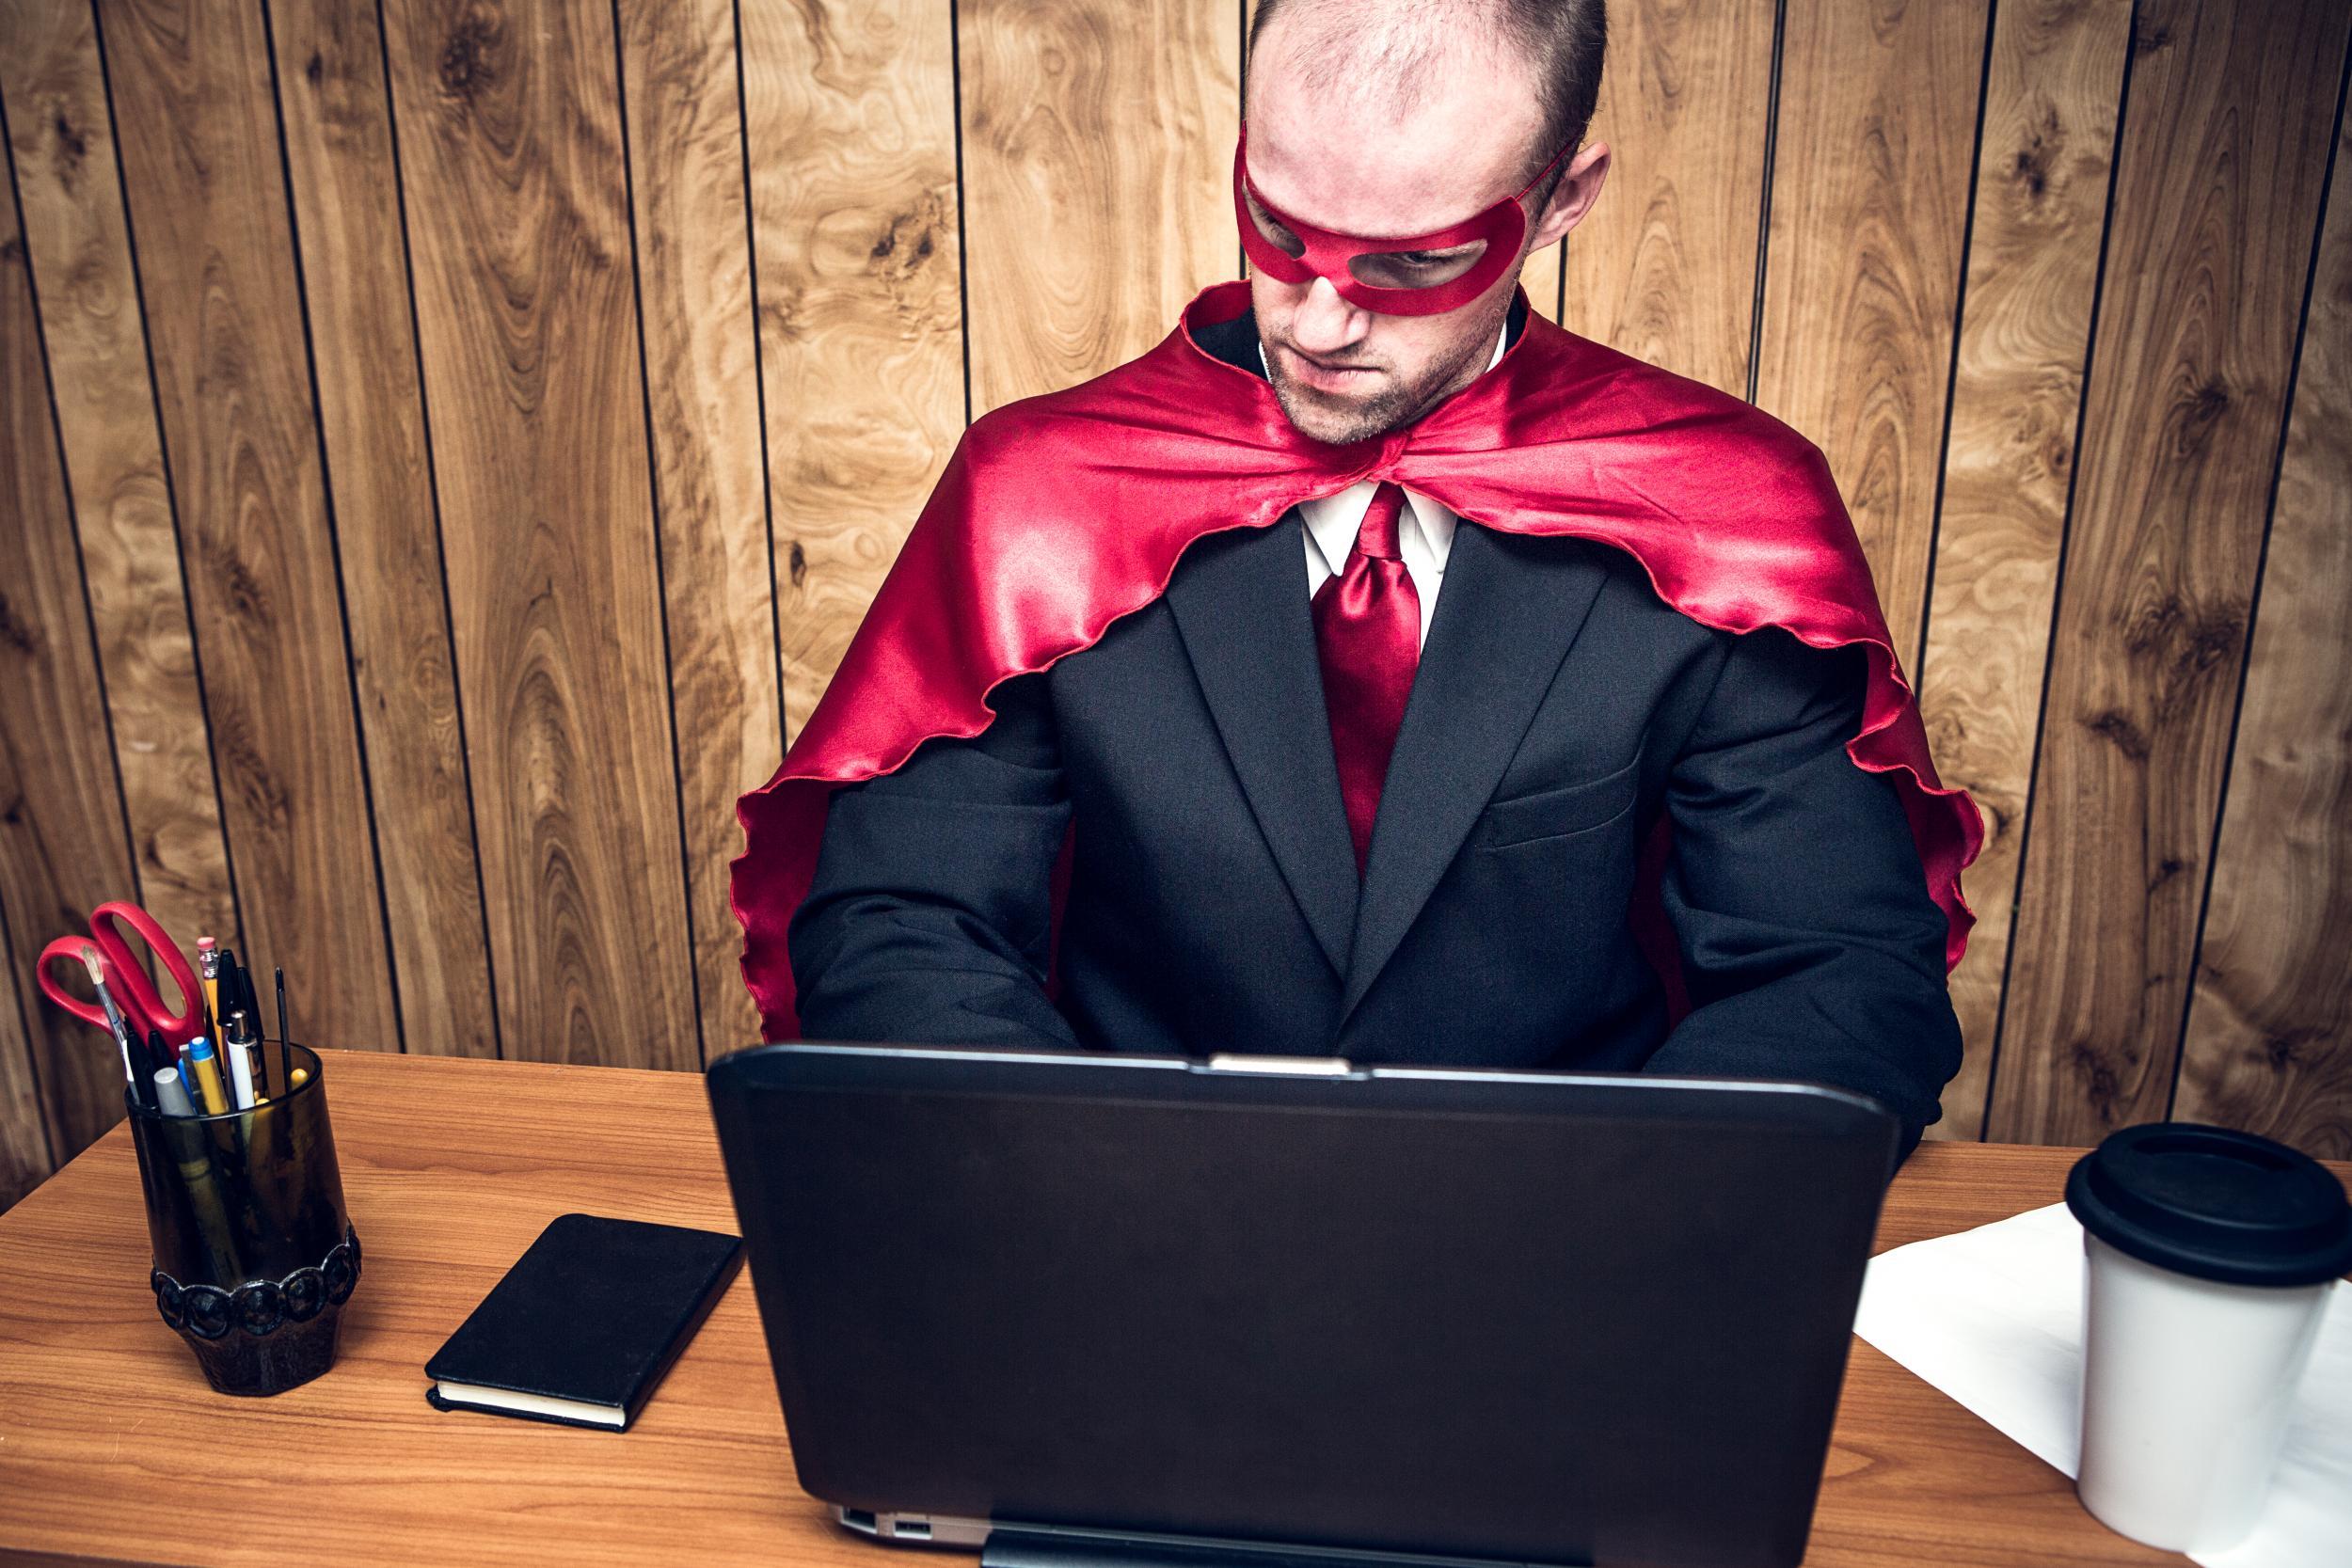 Do you think you're a workplace superhero?